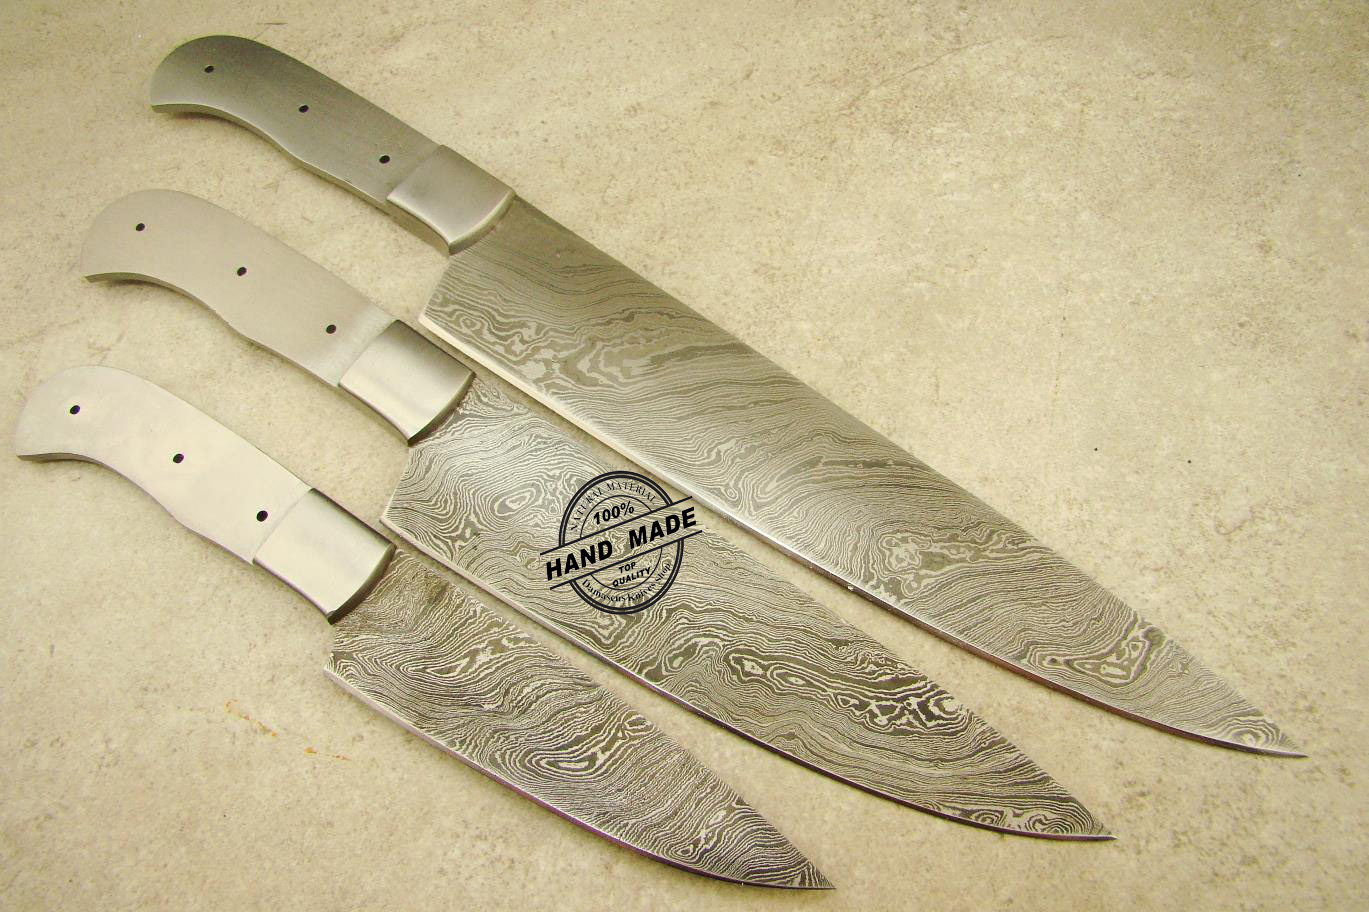 https://www.damascusknivesshop.com/wp-content/uploads/2015/05/3Pcs-Larg-Damascus-Chef-Blank-Blade-Knife-2.jpg